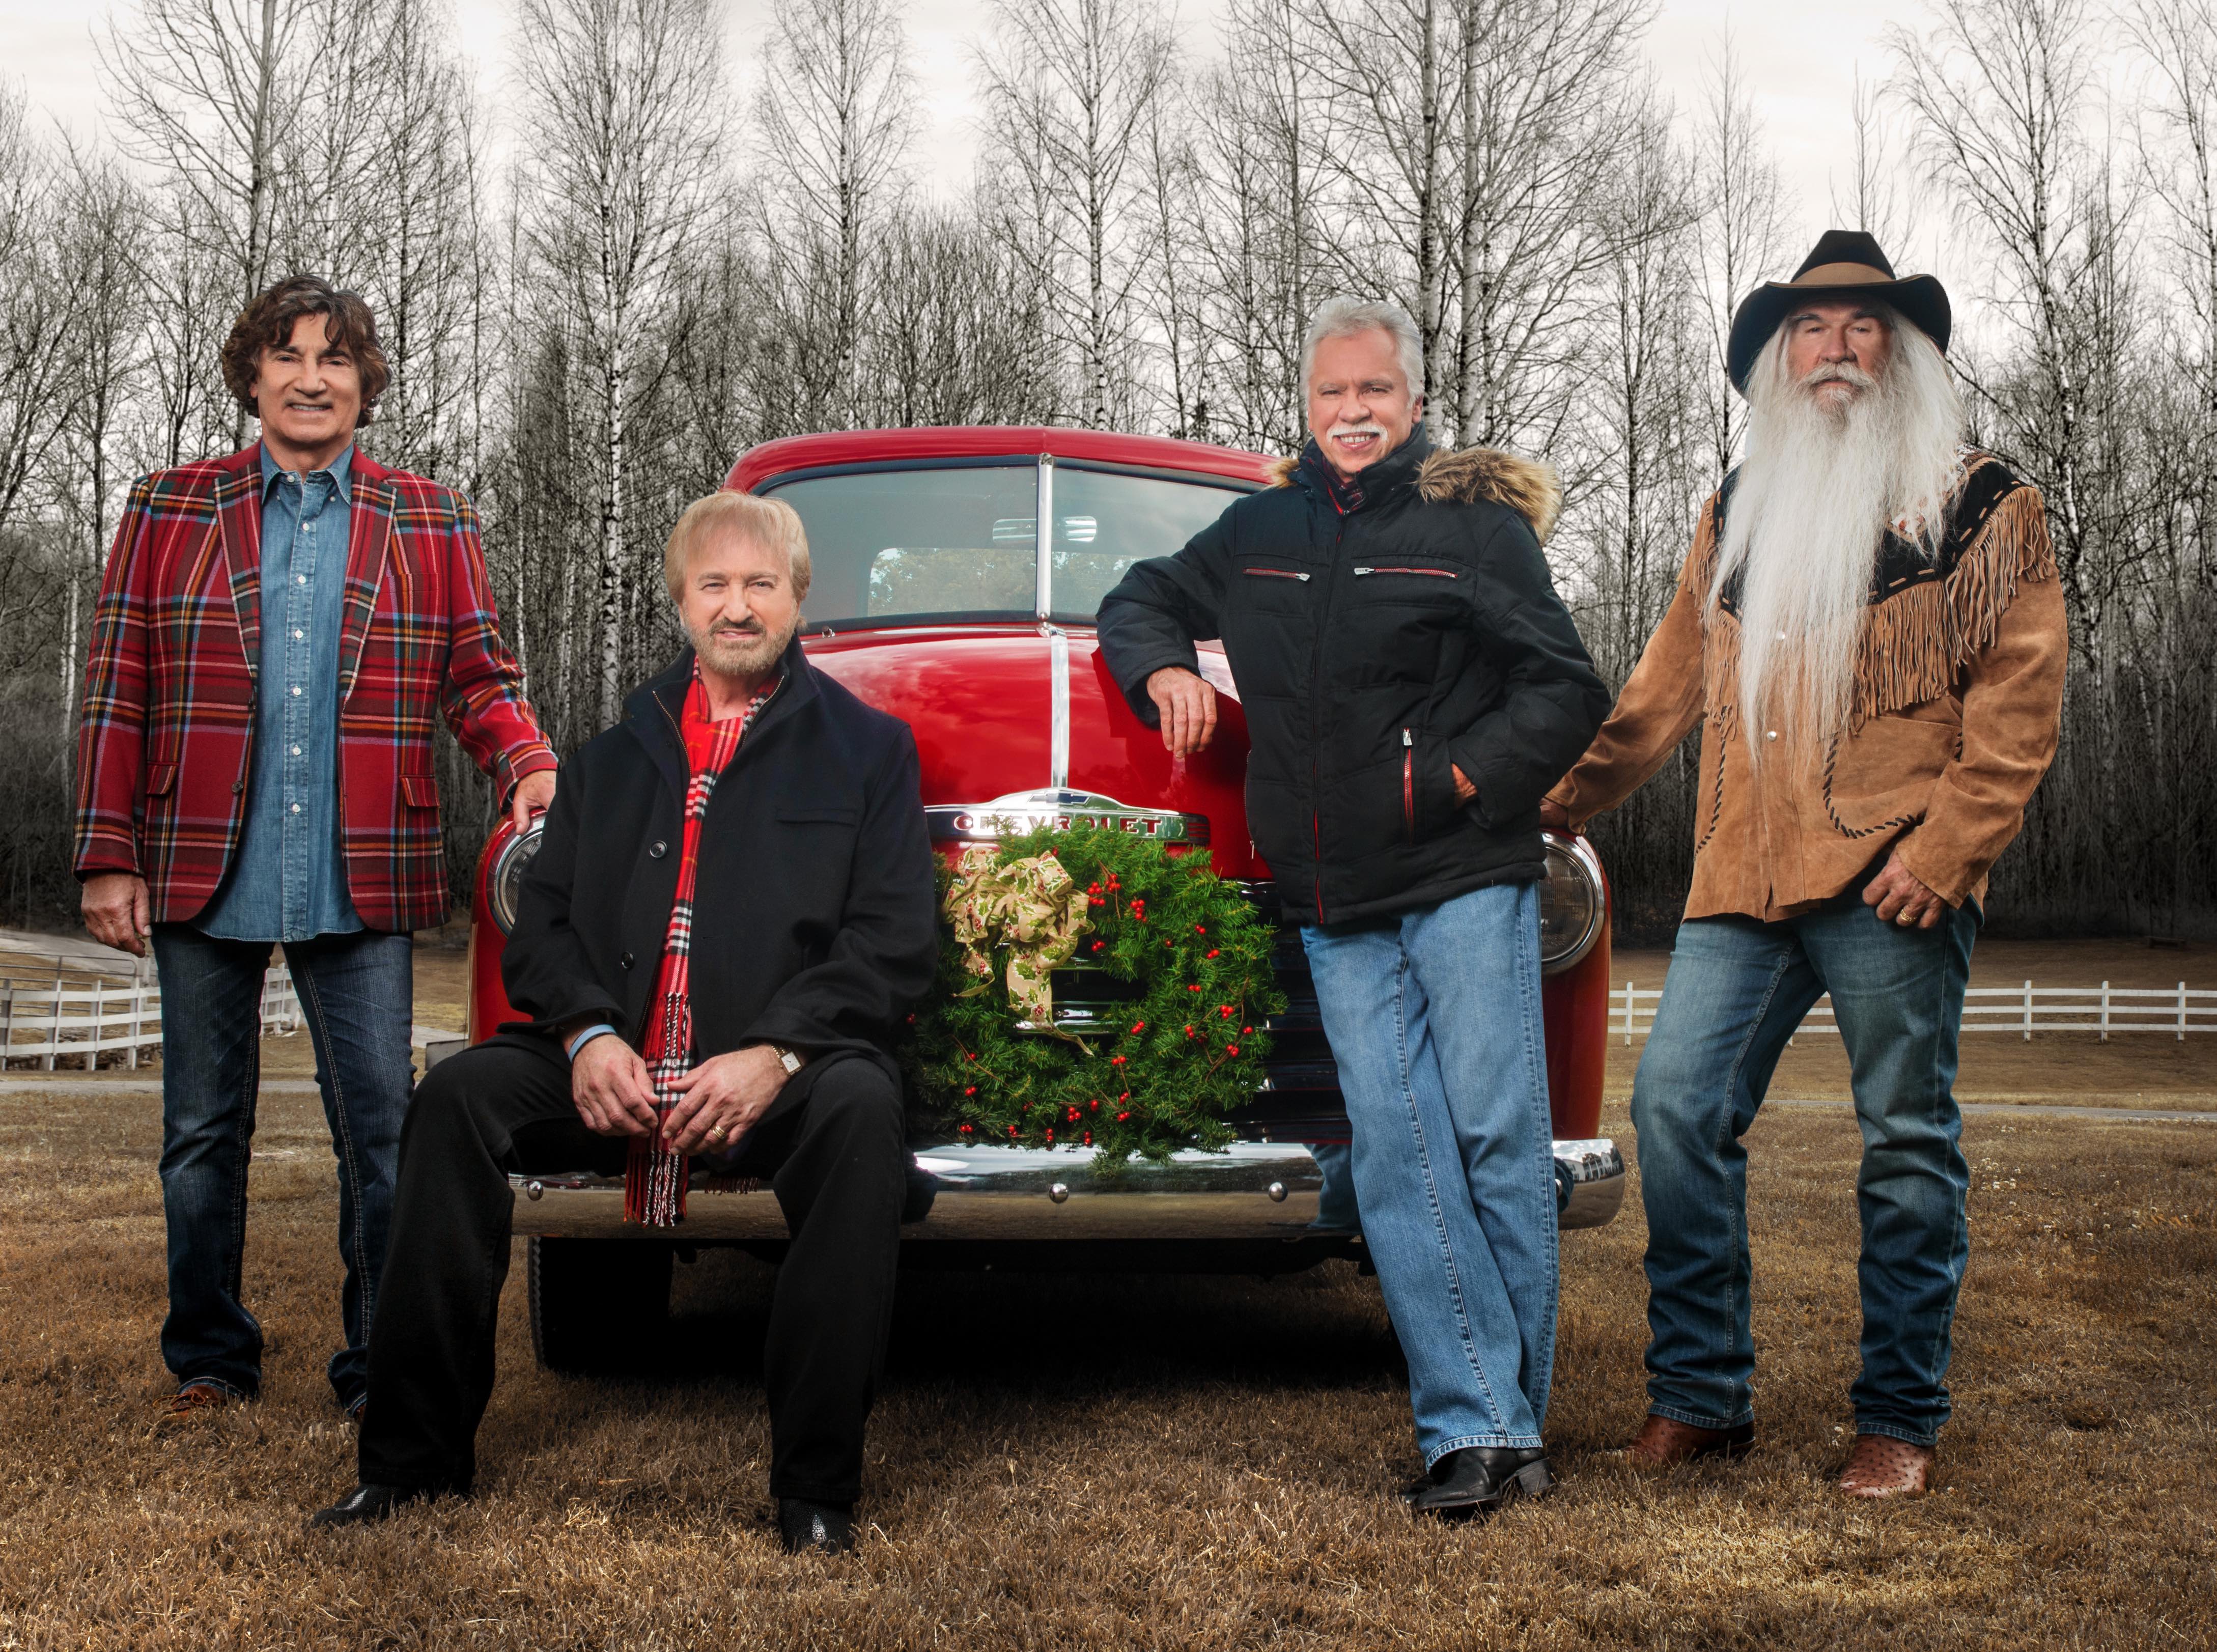 The Oak Ridge Boys will Embark on their 29th Annual Christmas Tour Next Month